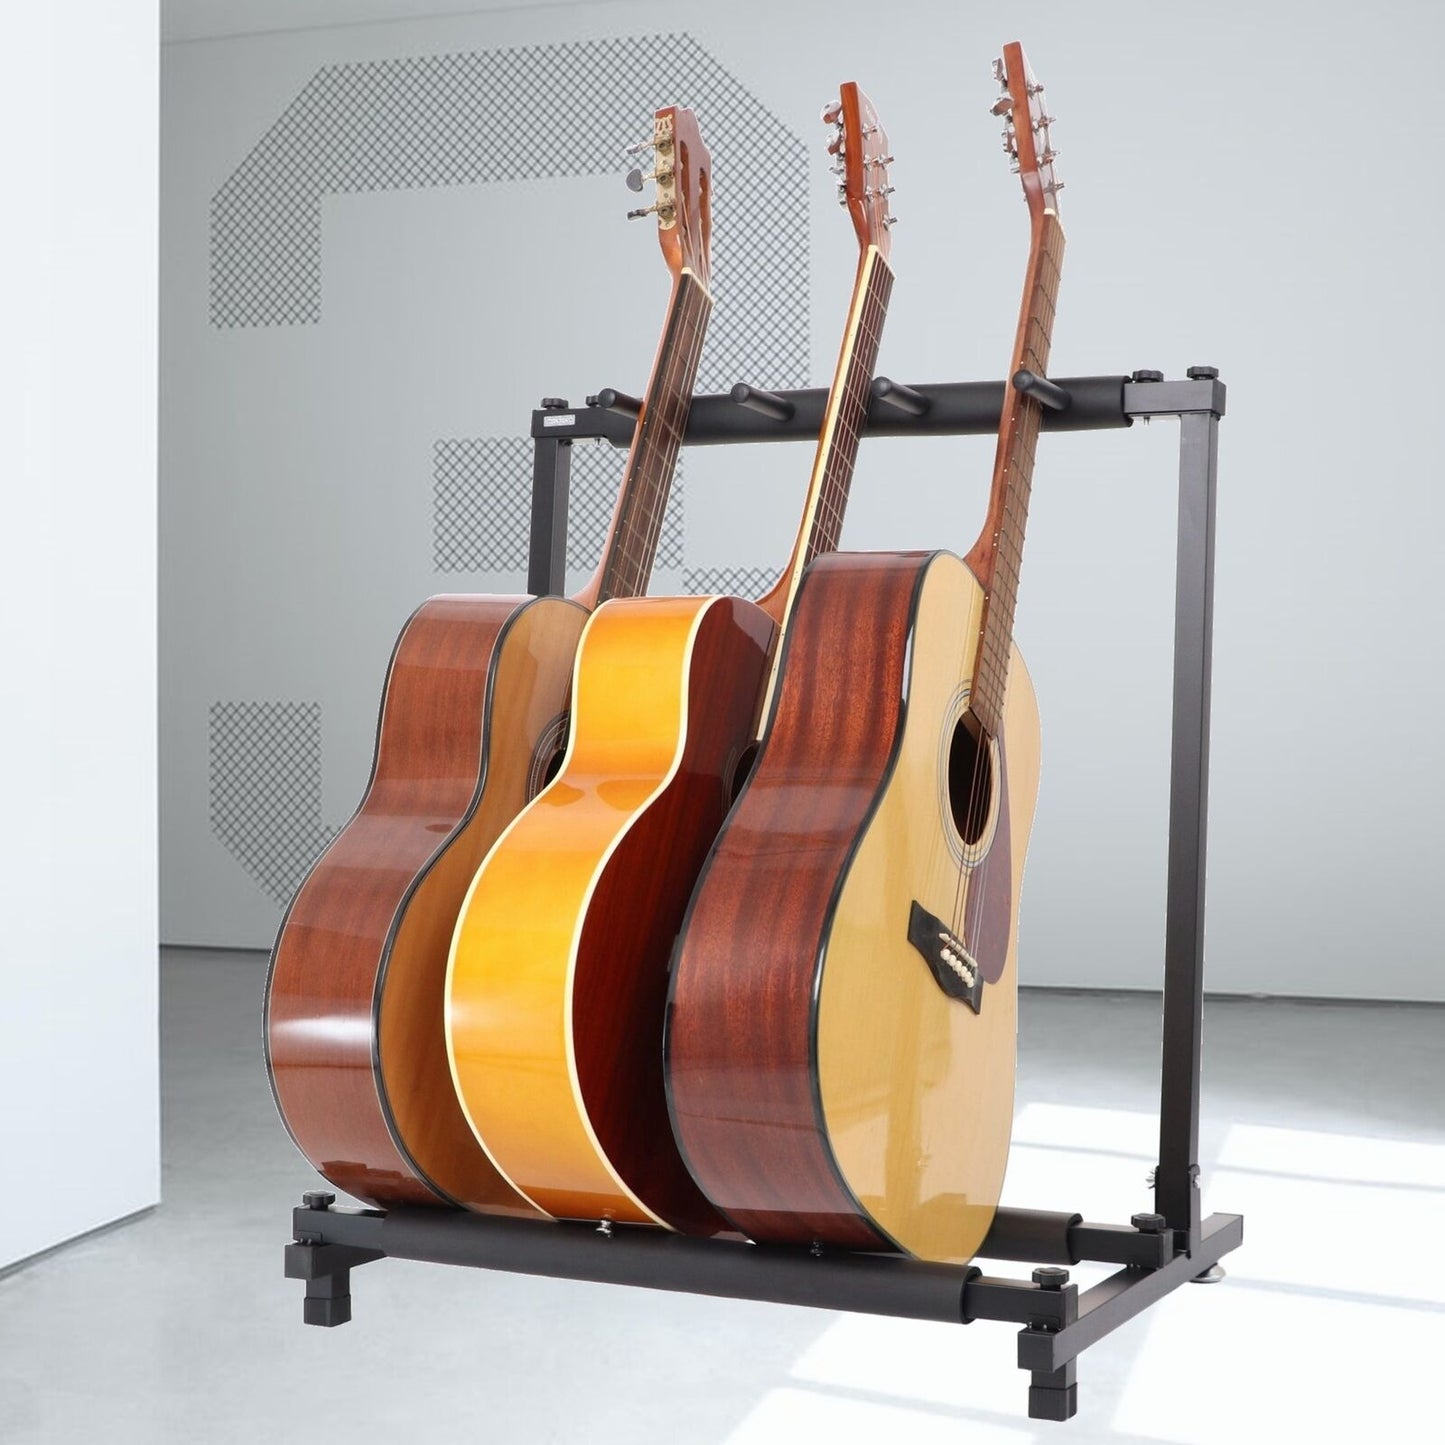 Haze GS014-3 Metal Structure 3-Guitar-Stand/Storage & Display Rack,Foldable,BK